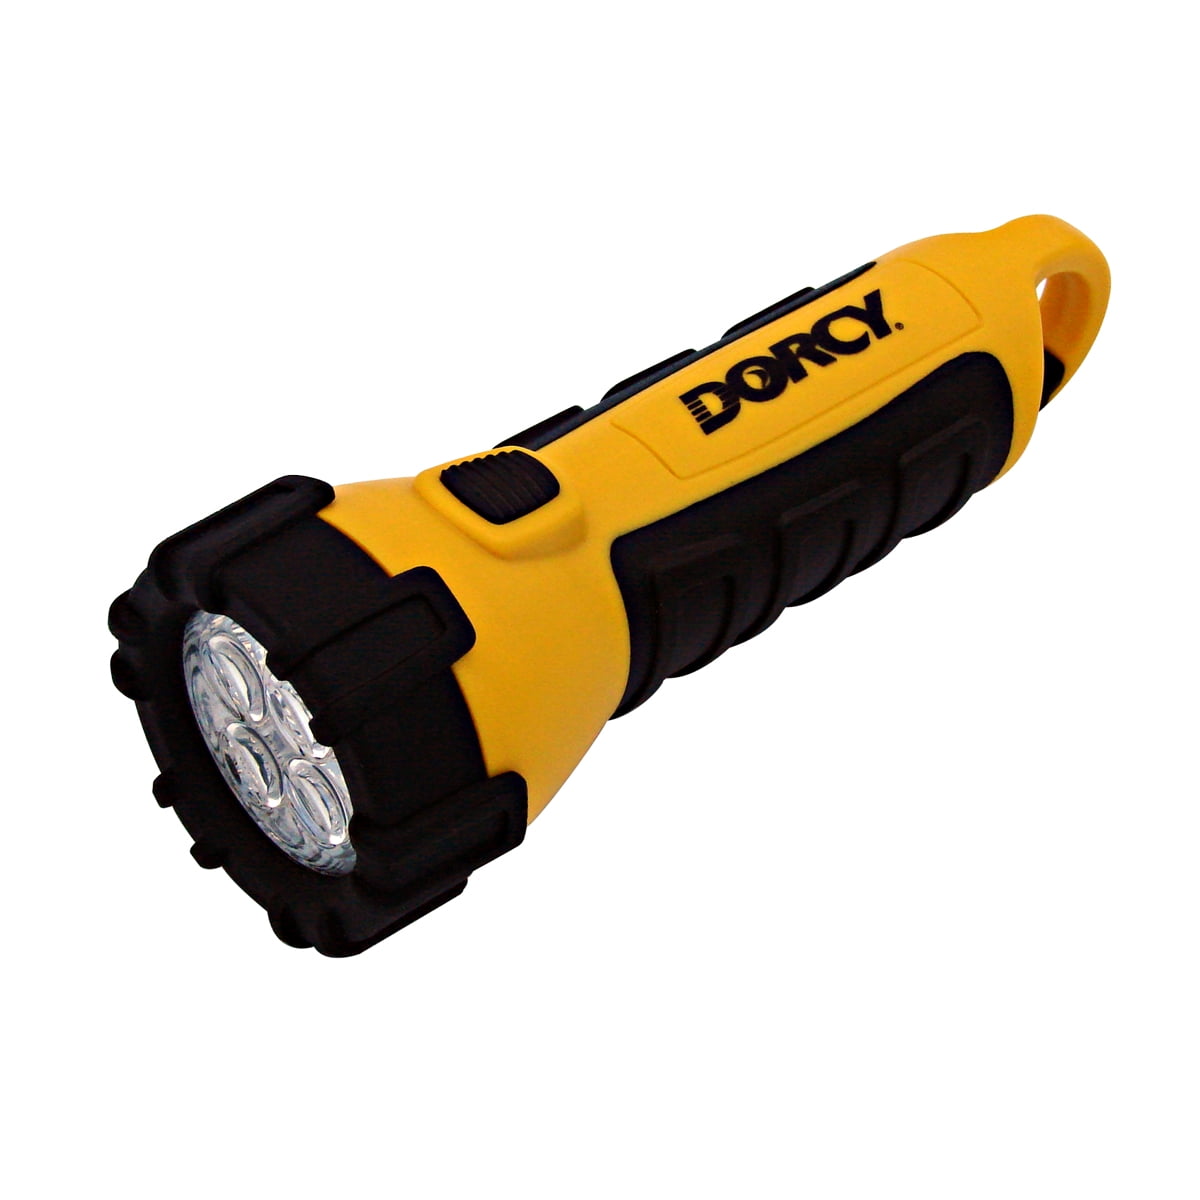 DORCY DORCY® 41-2510 55-Lumen 4-LED Carabiner Waterproof Flashlight 